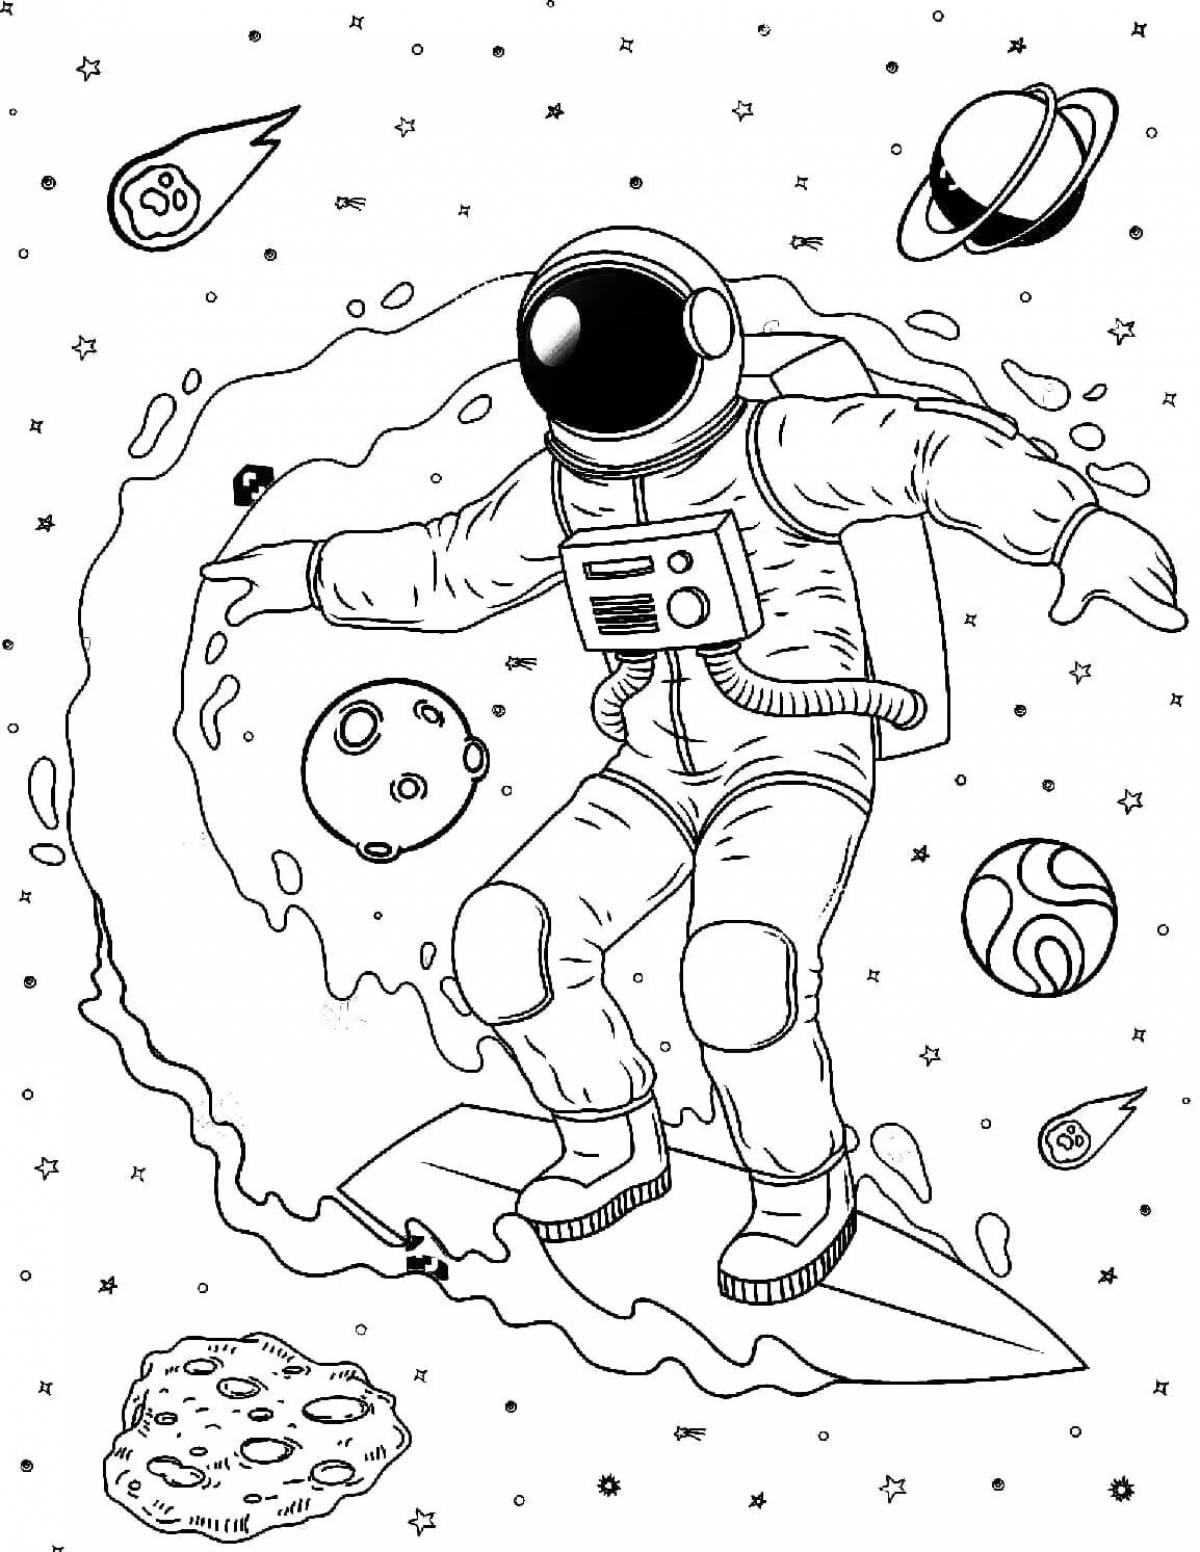 Spaceman in spacesuit #1